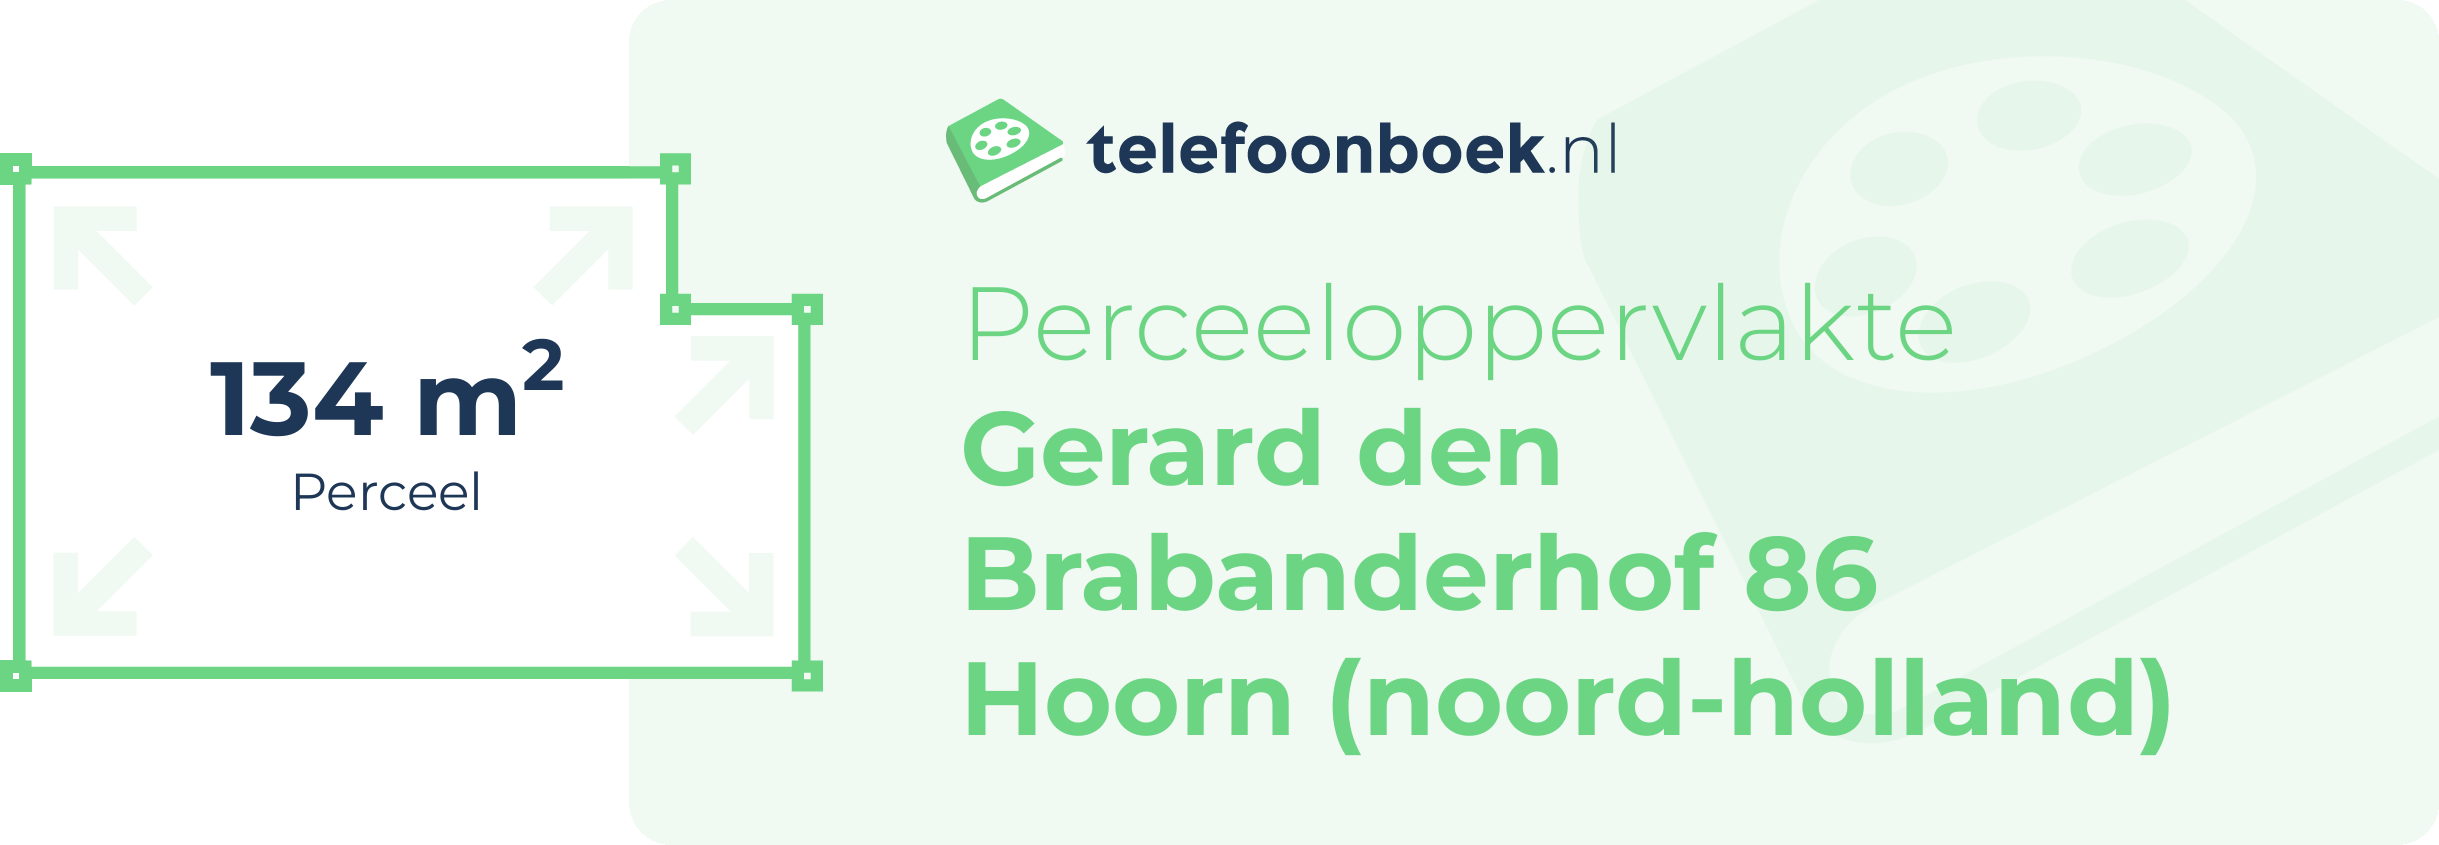 Perceeloppervlakte Gerard Den Brabanderhof 86 Hoorn (Noord-Holland)